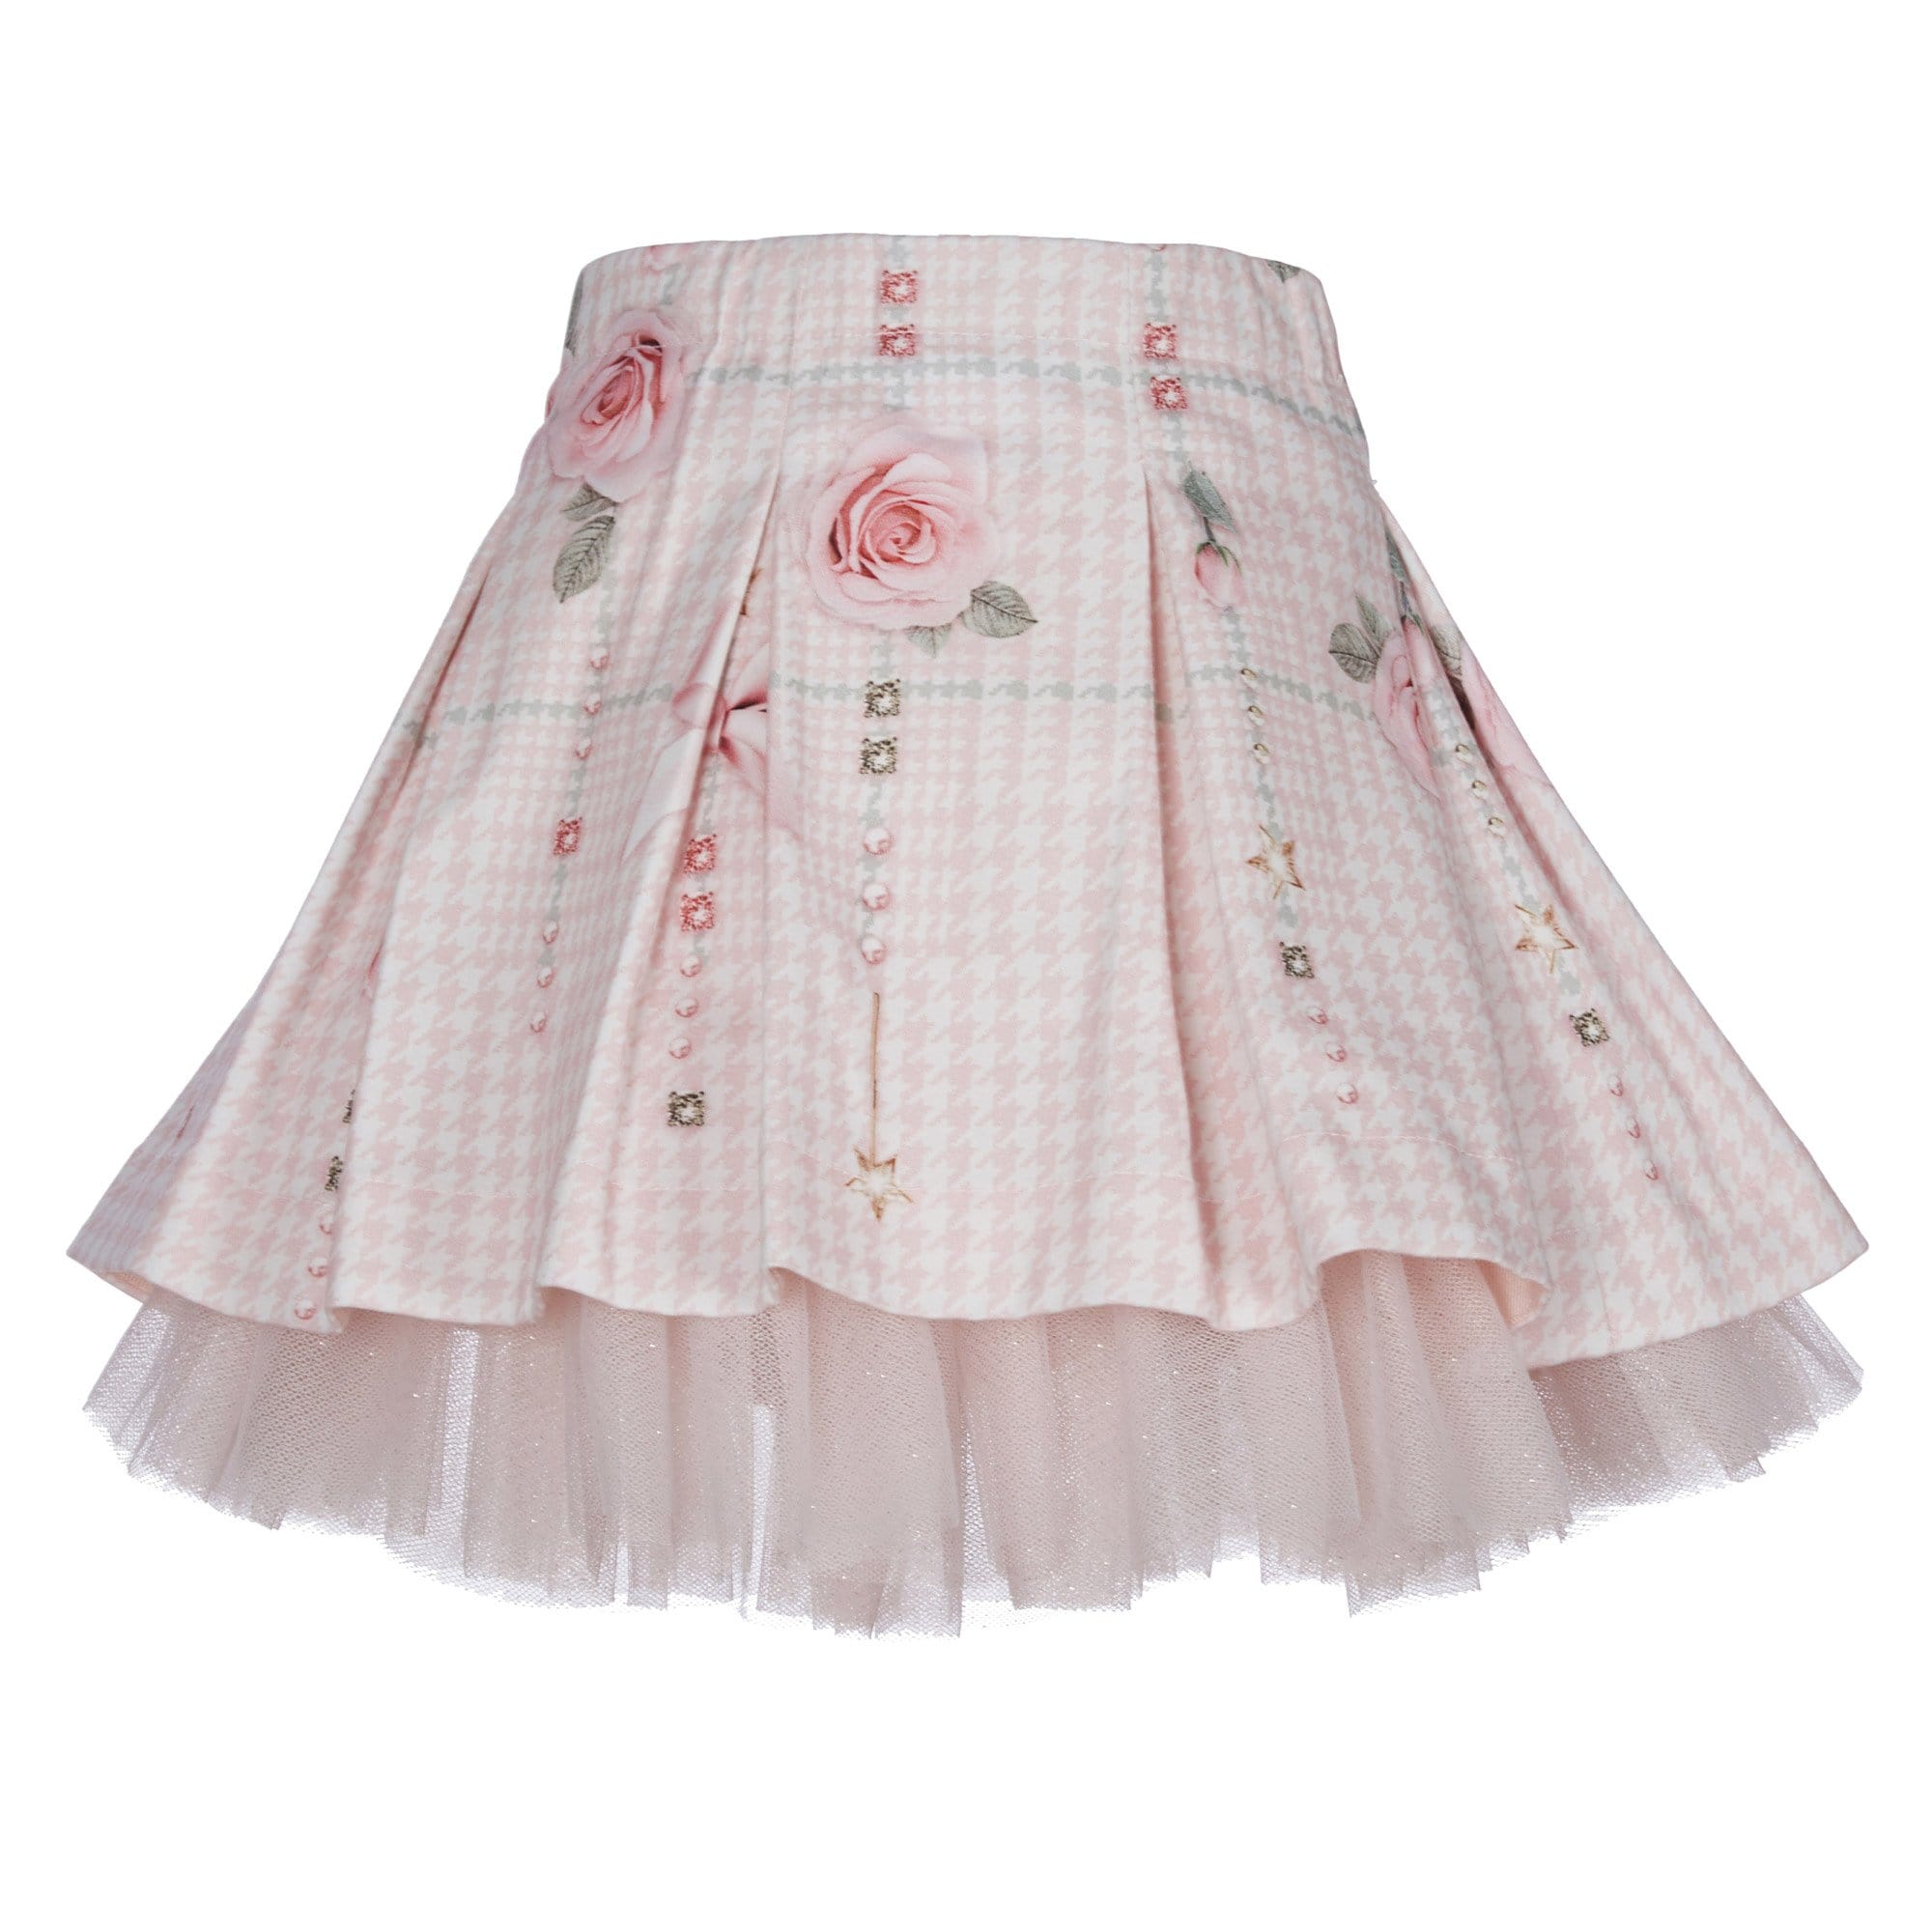 LAPIN HOUSE - Dog Tooth Skirt Set - Pink